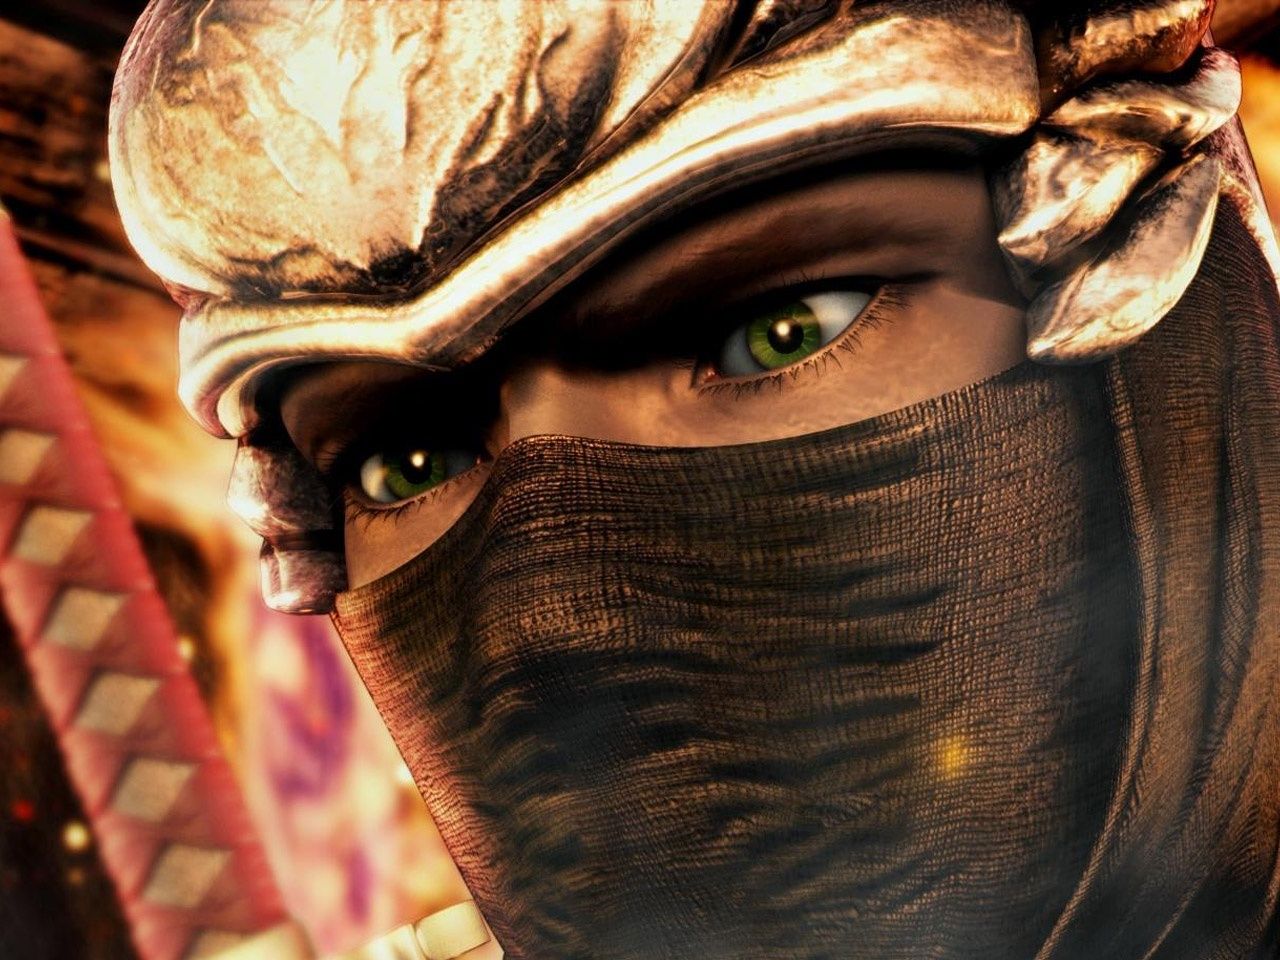 Ninja Gaiden face wallpaper. Ninja Gaiden face